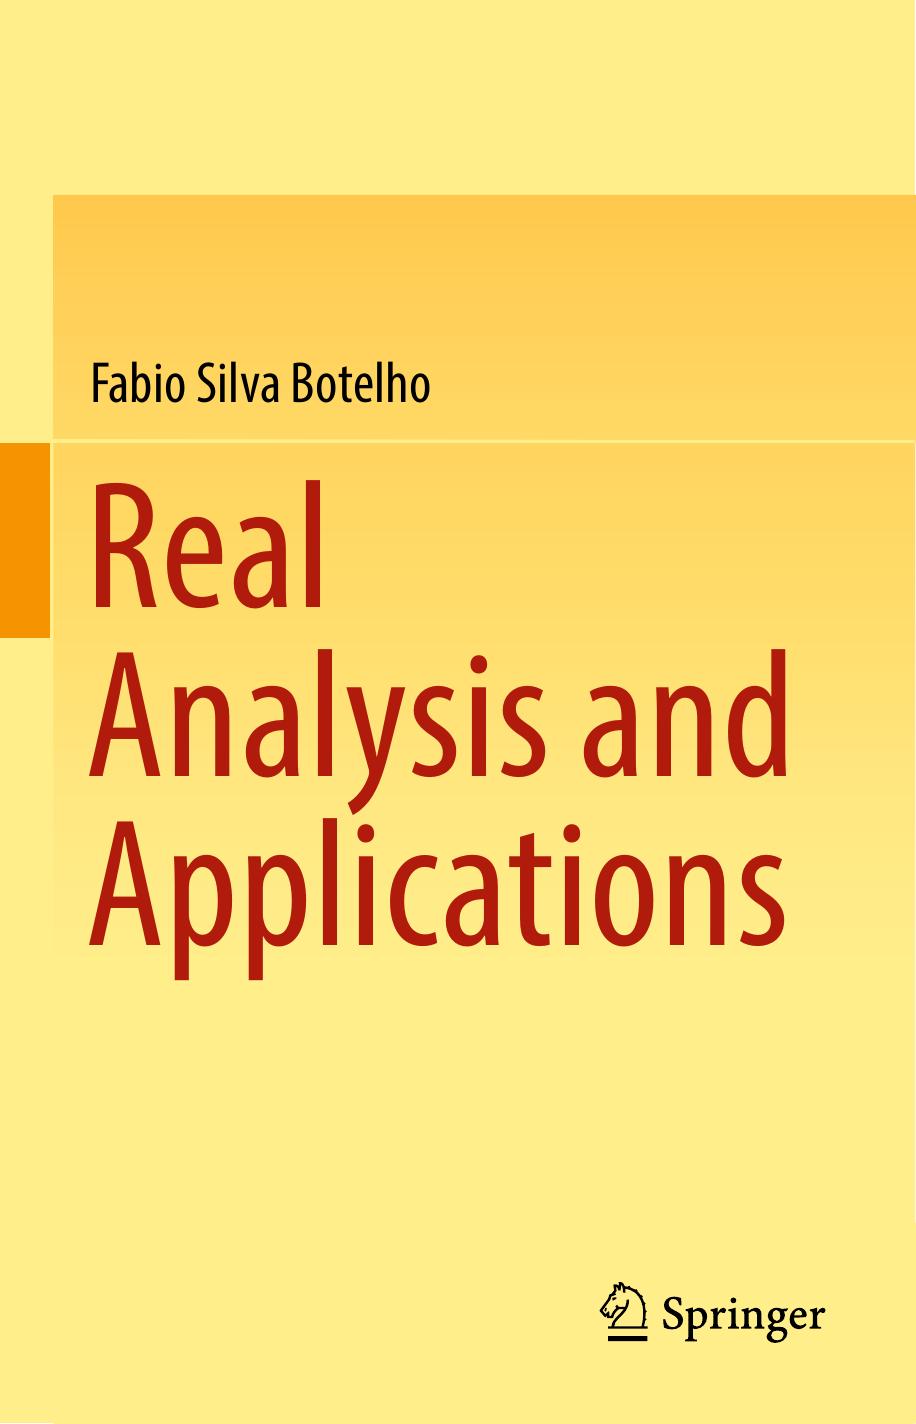 Real Analysis and Applications by Fabio Silva Botelho